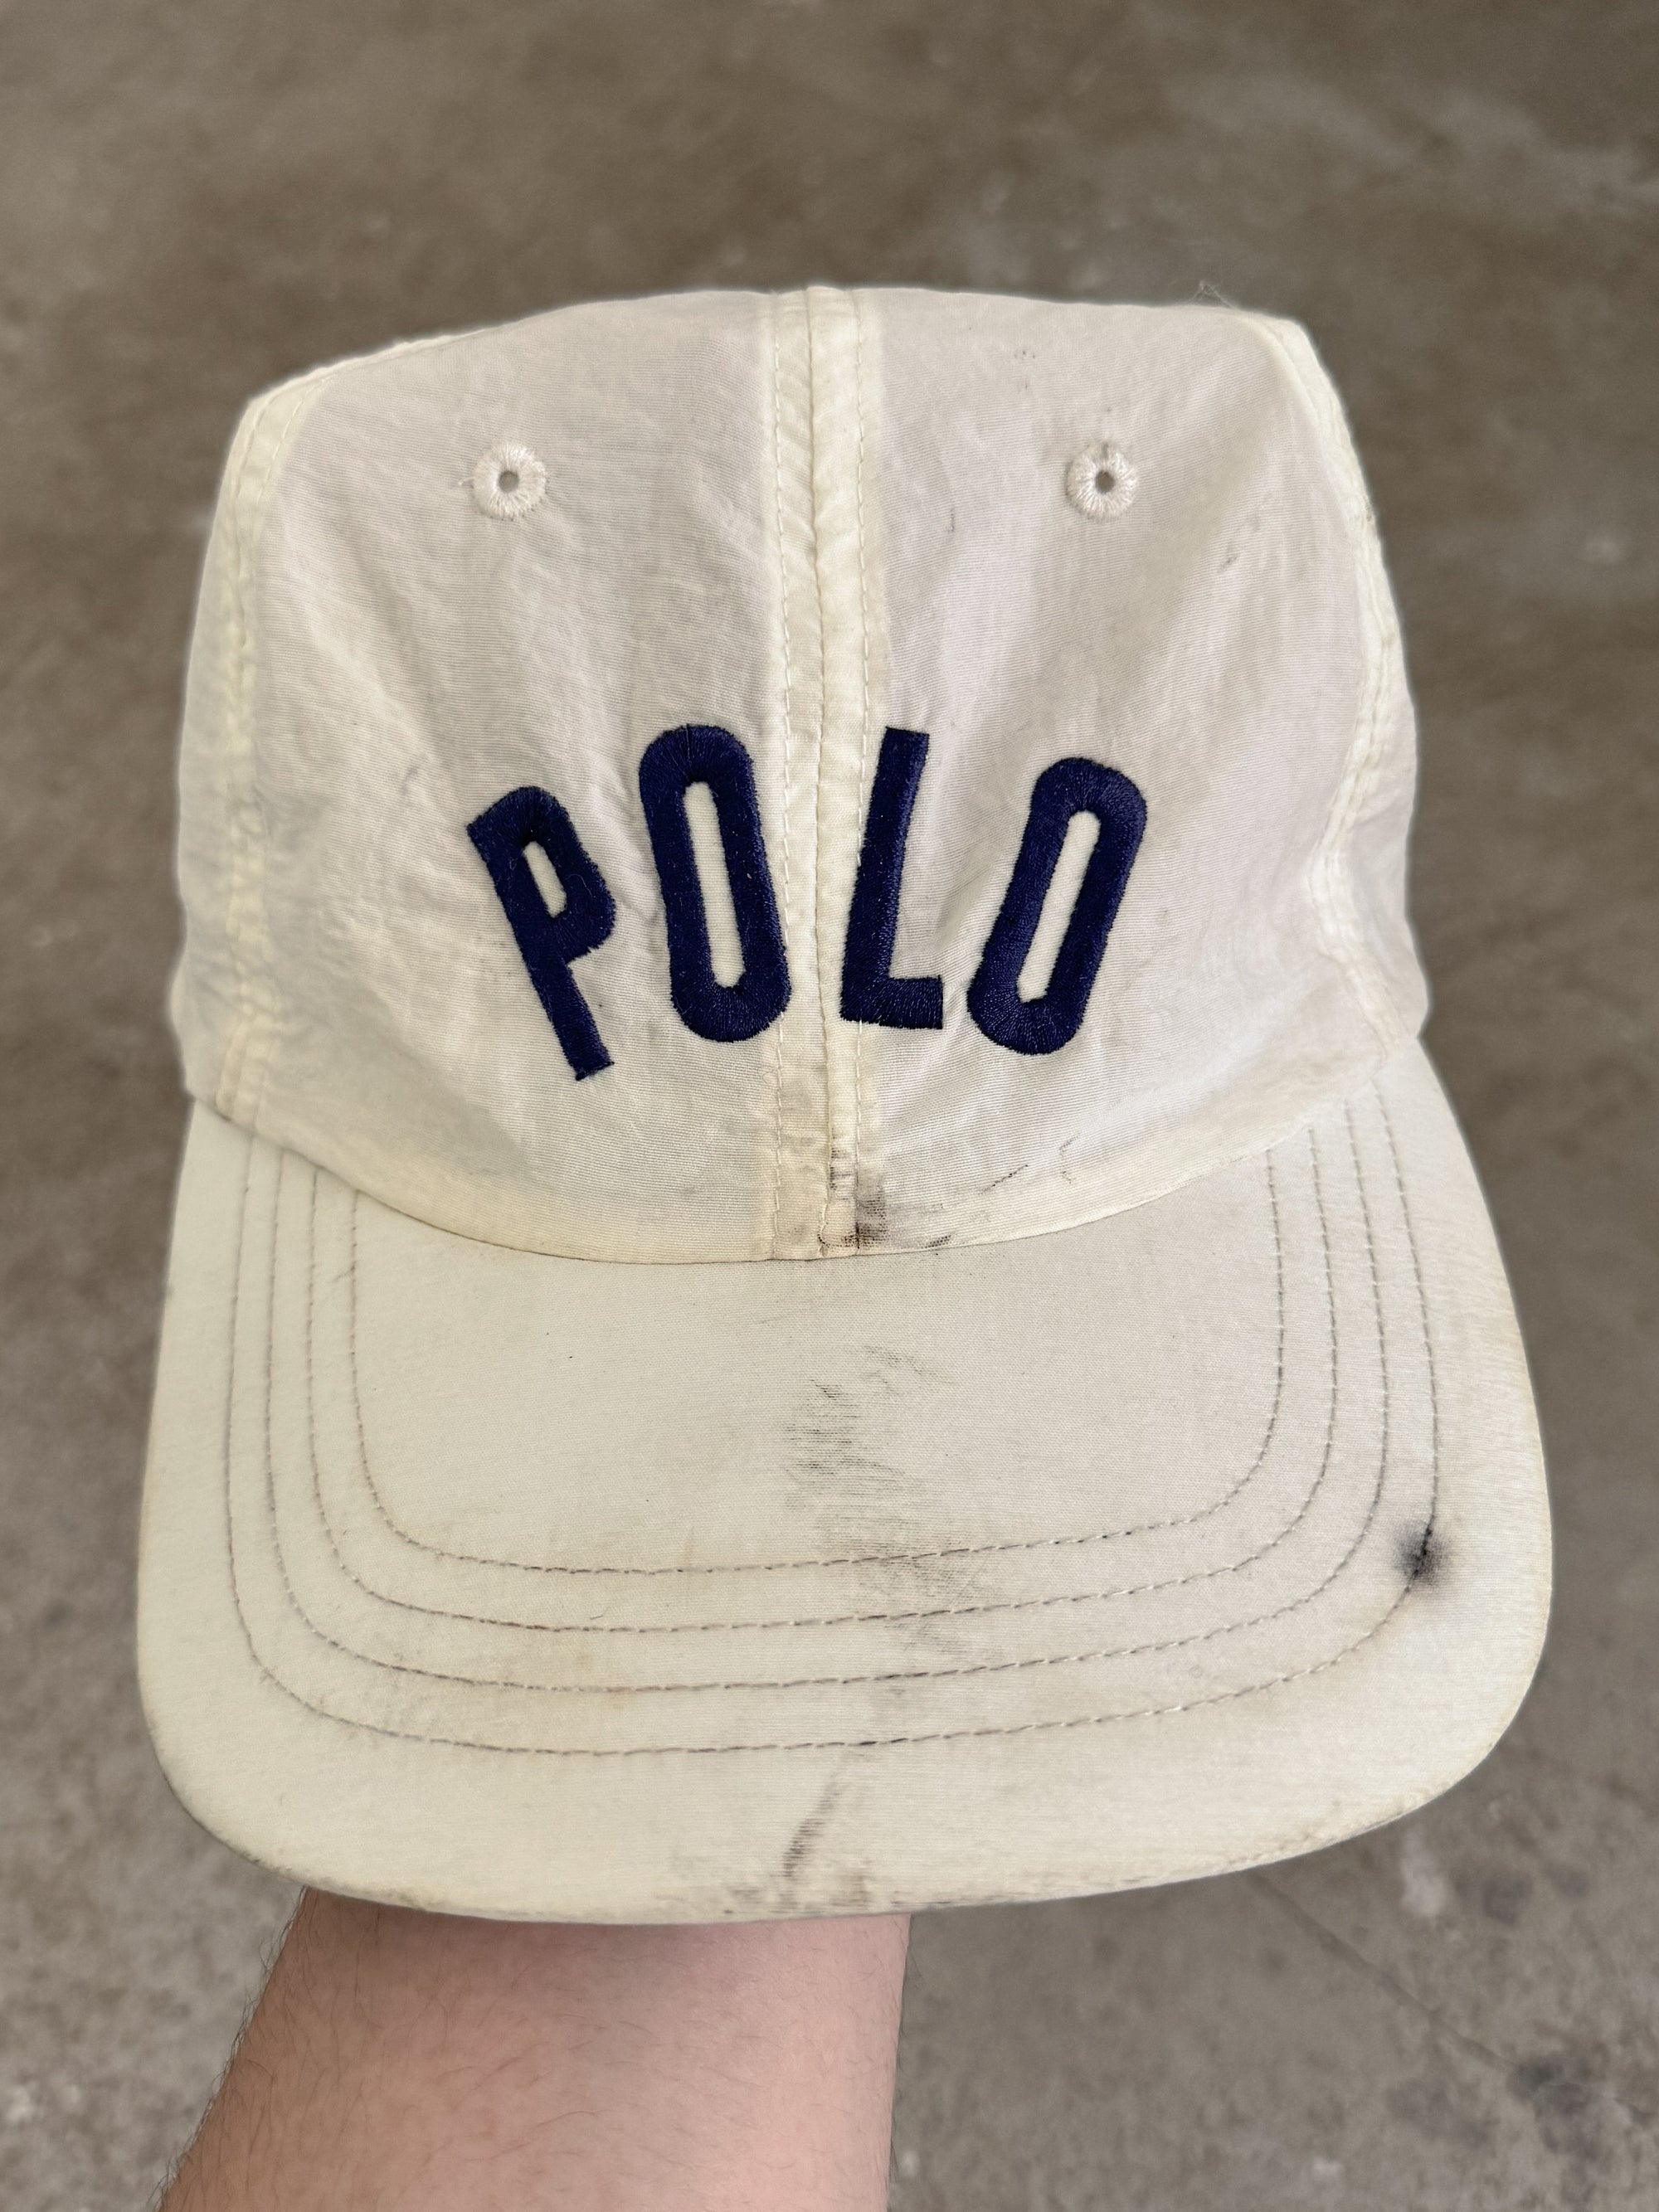 1990s "Polo" Nylon Hat